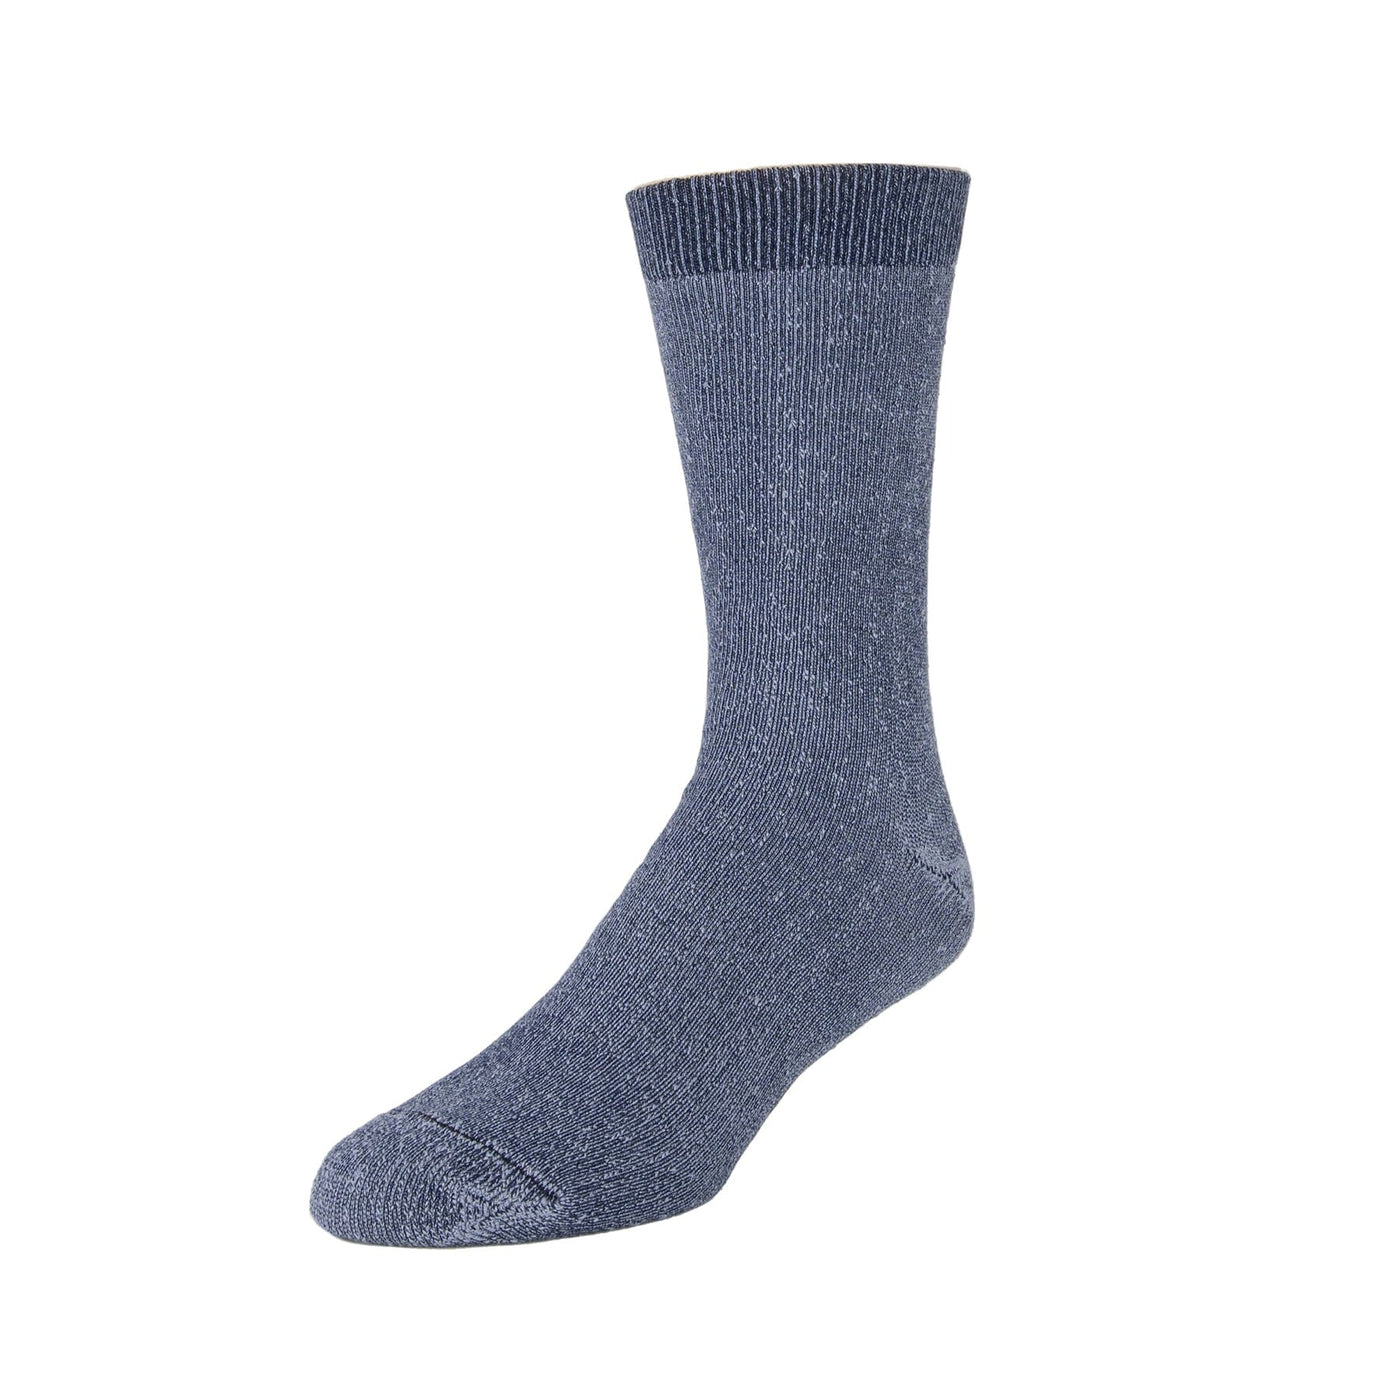 Zkano Boot Socks Large Canyon - Full Cushion Organic Cotton Boot Socks - Steel organic-socks-made-in-usa